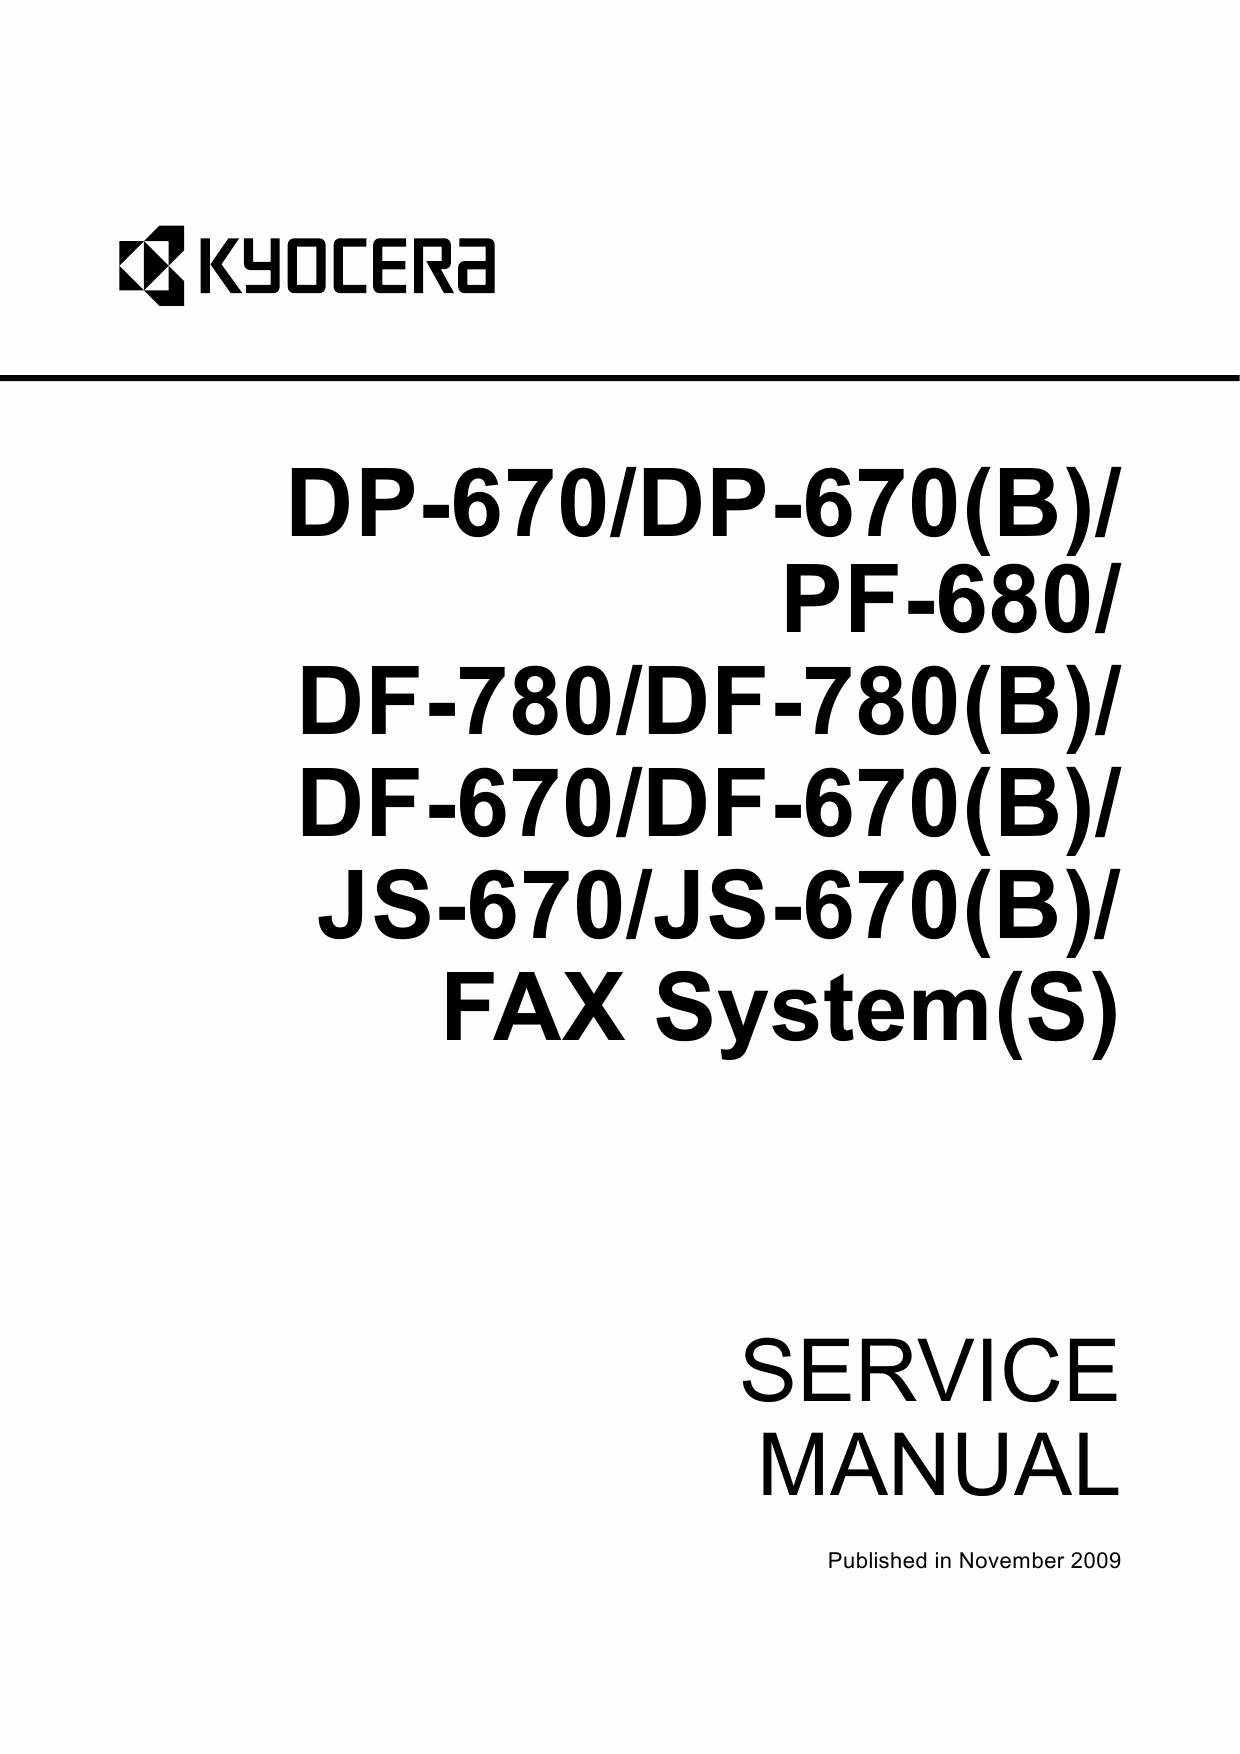 KYOCERA Options DP-670 670(B) PF-680 DF-780 780(B) 670 670(B) JS-670 670(B) FAX-System-S Parts and Service Manual-1